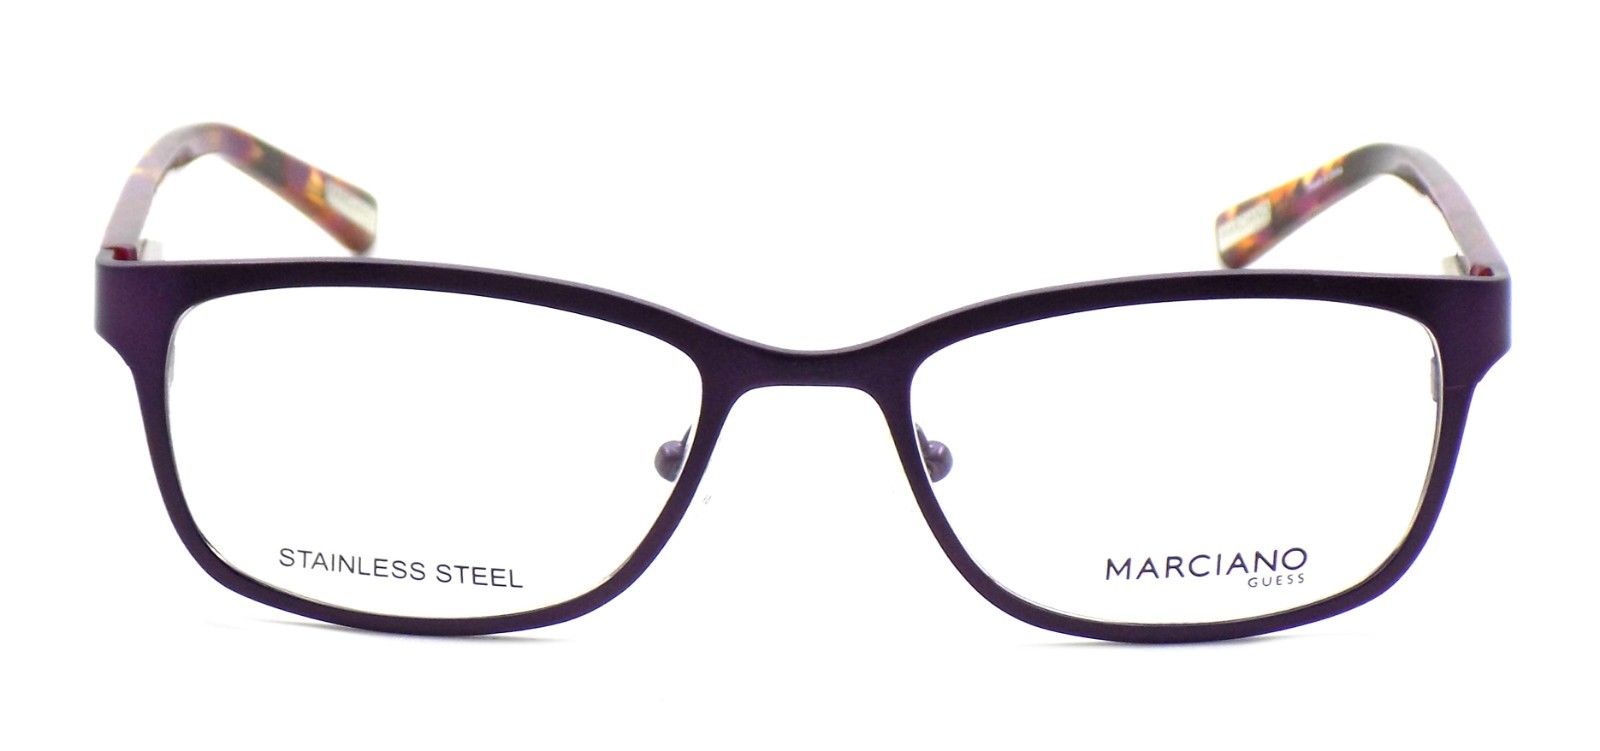 2-GUESS by Marciano GM0272 083 Women's Eyeglasses Frames 51-18-135 Violet + CASE-664689741892-IKSpecs